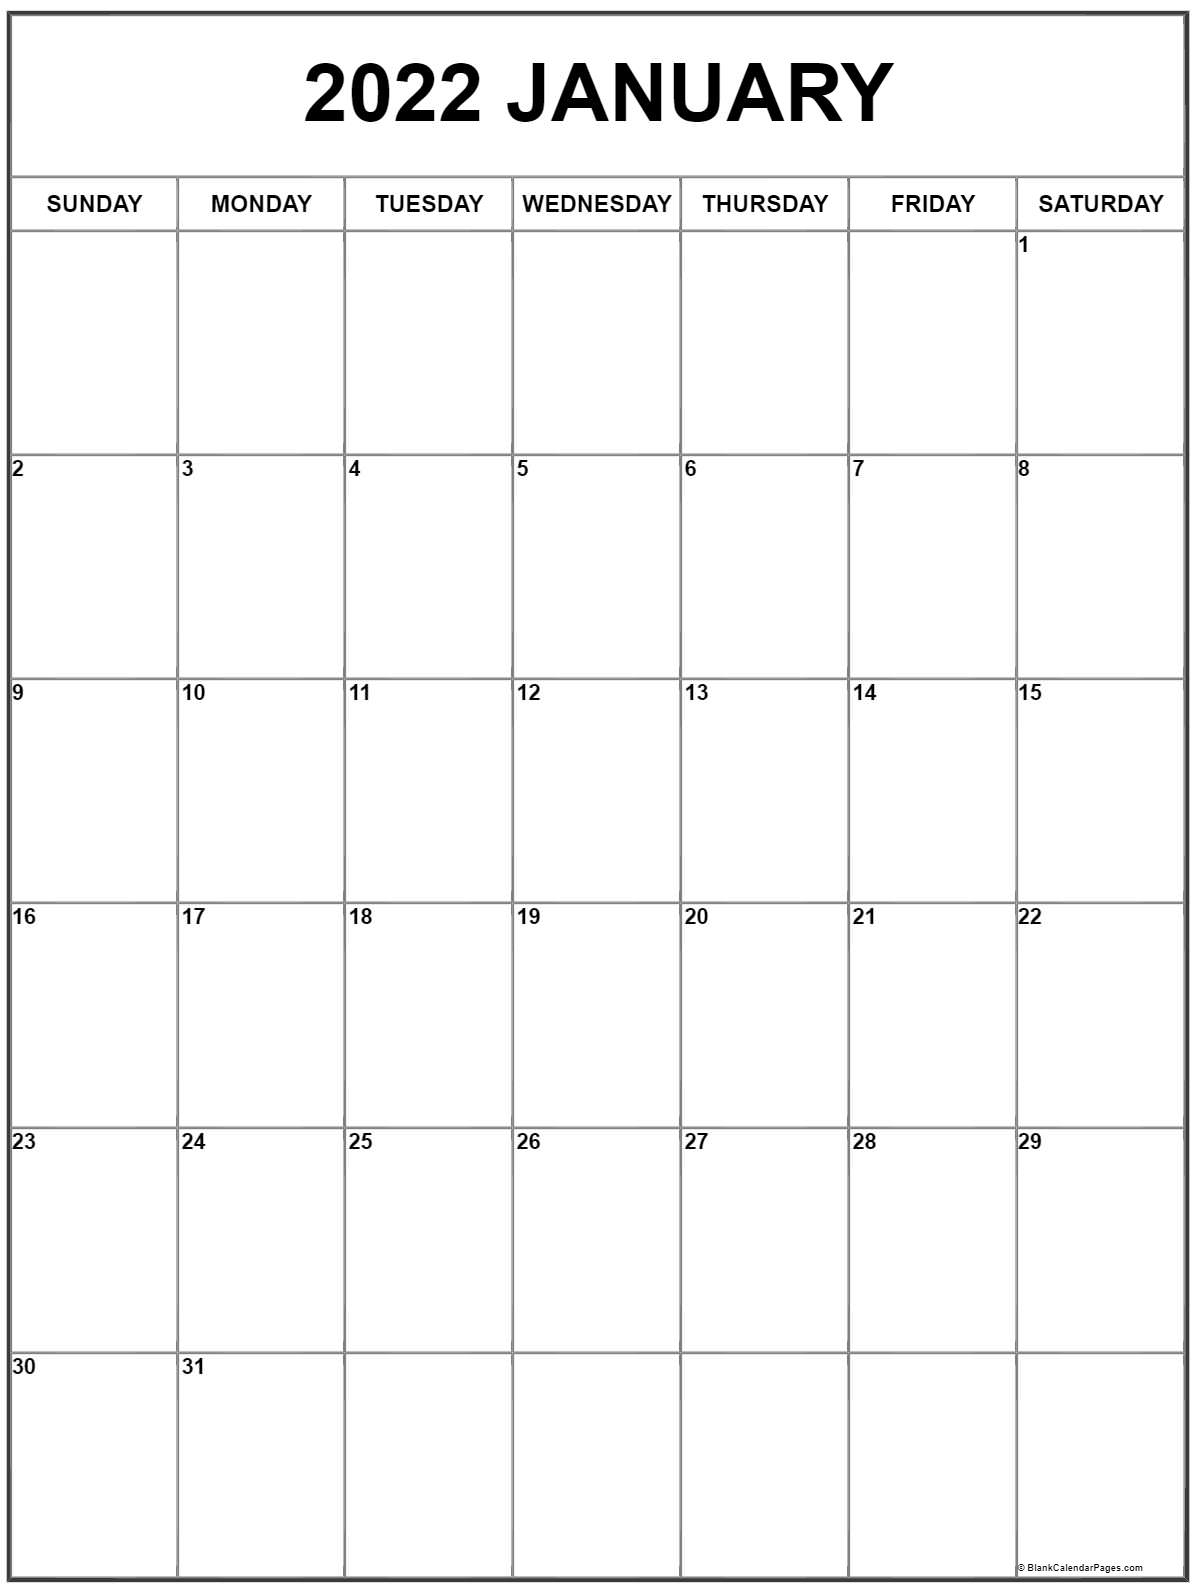 2022 Printable Calendar Vertical : Monthly Calendar 2022 | Free in Free Printable Calendar 2022 Vertical